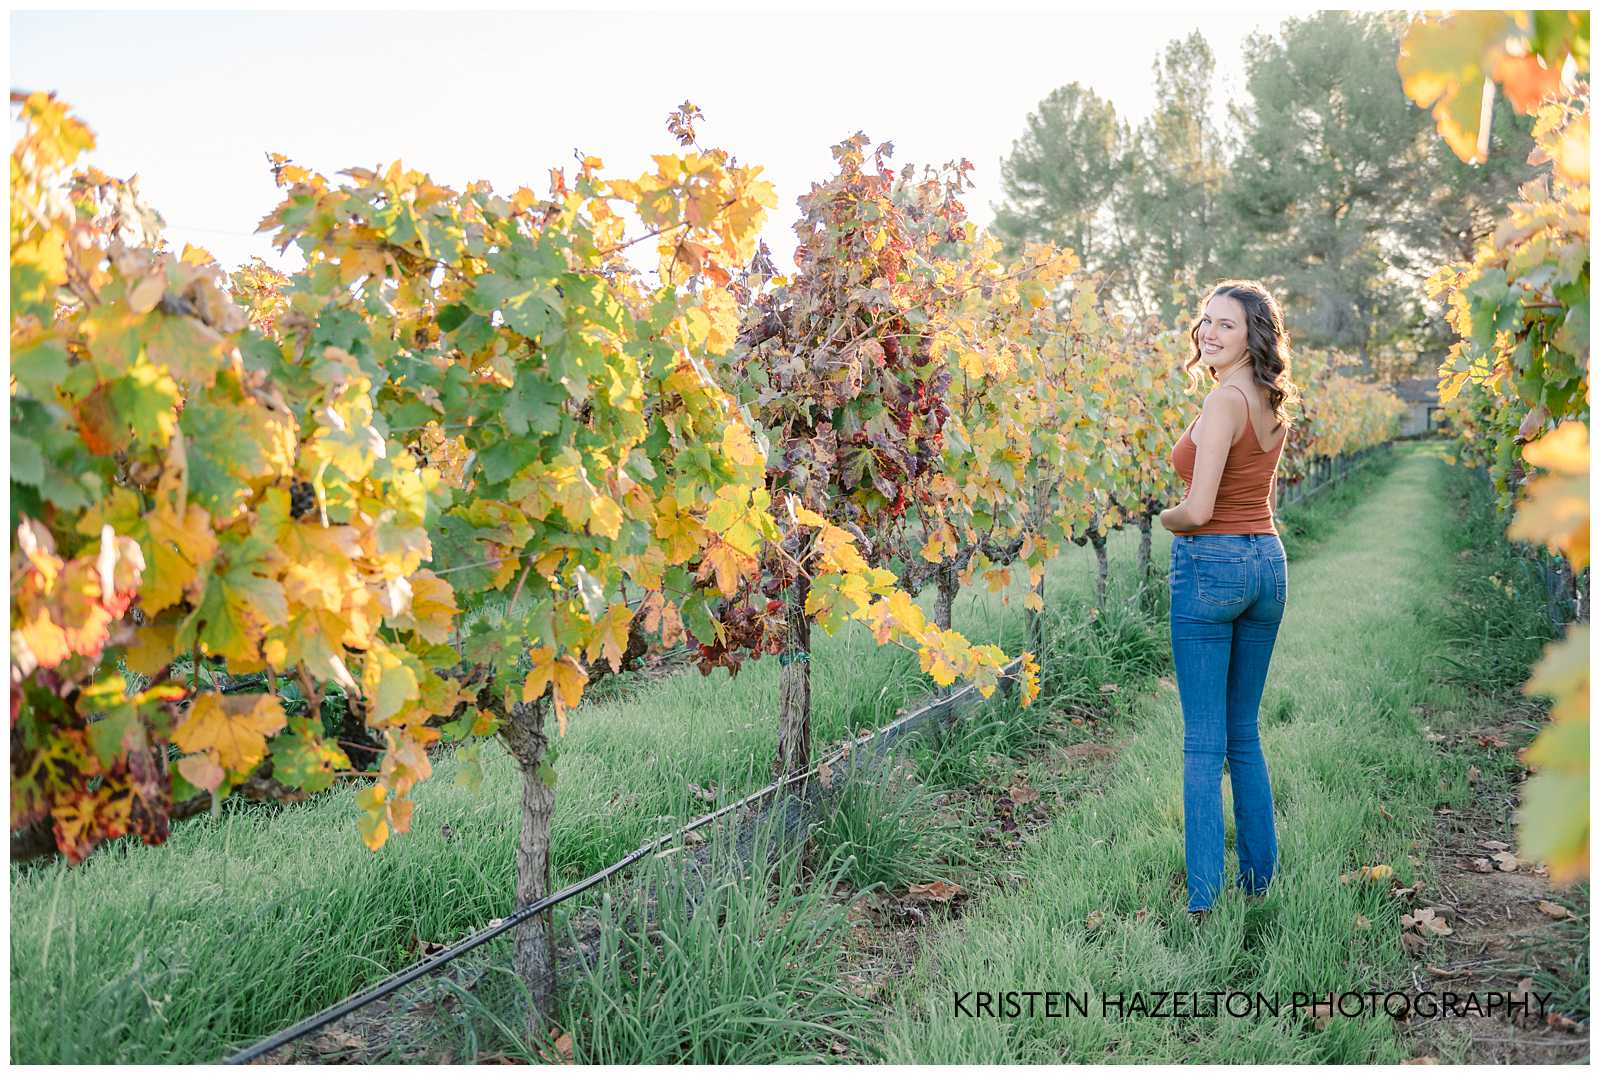 Girl in orange shirt and blue jeans walking through a vineyard